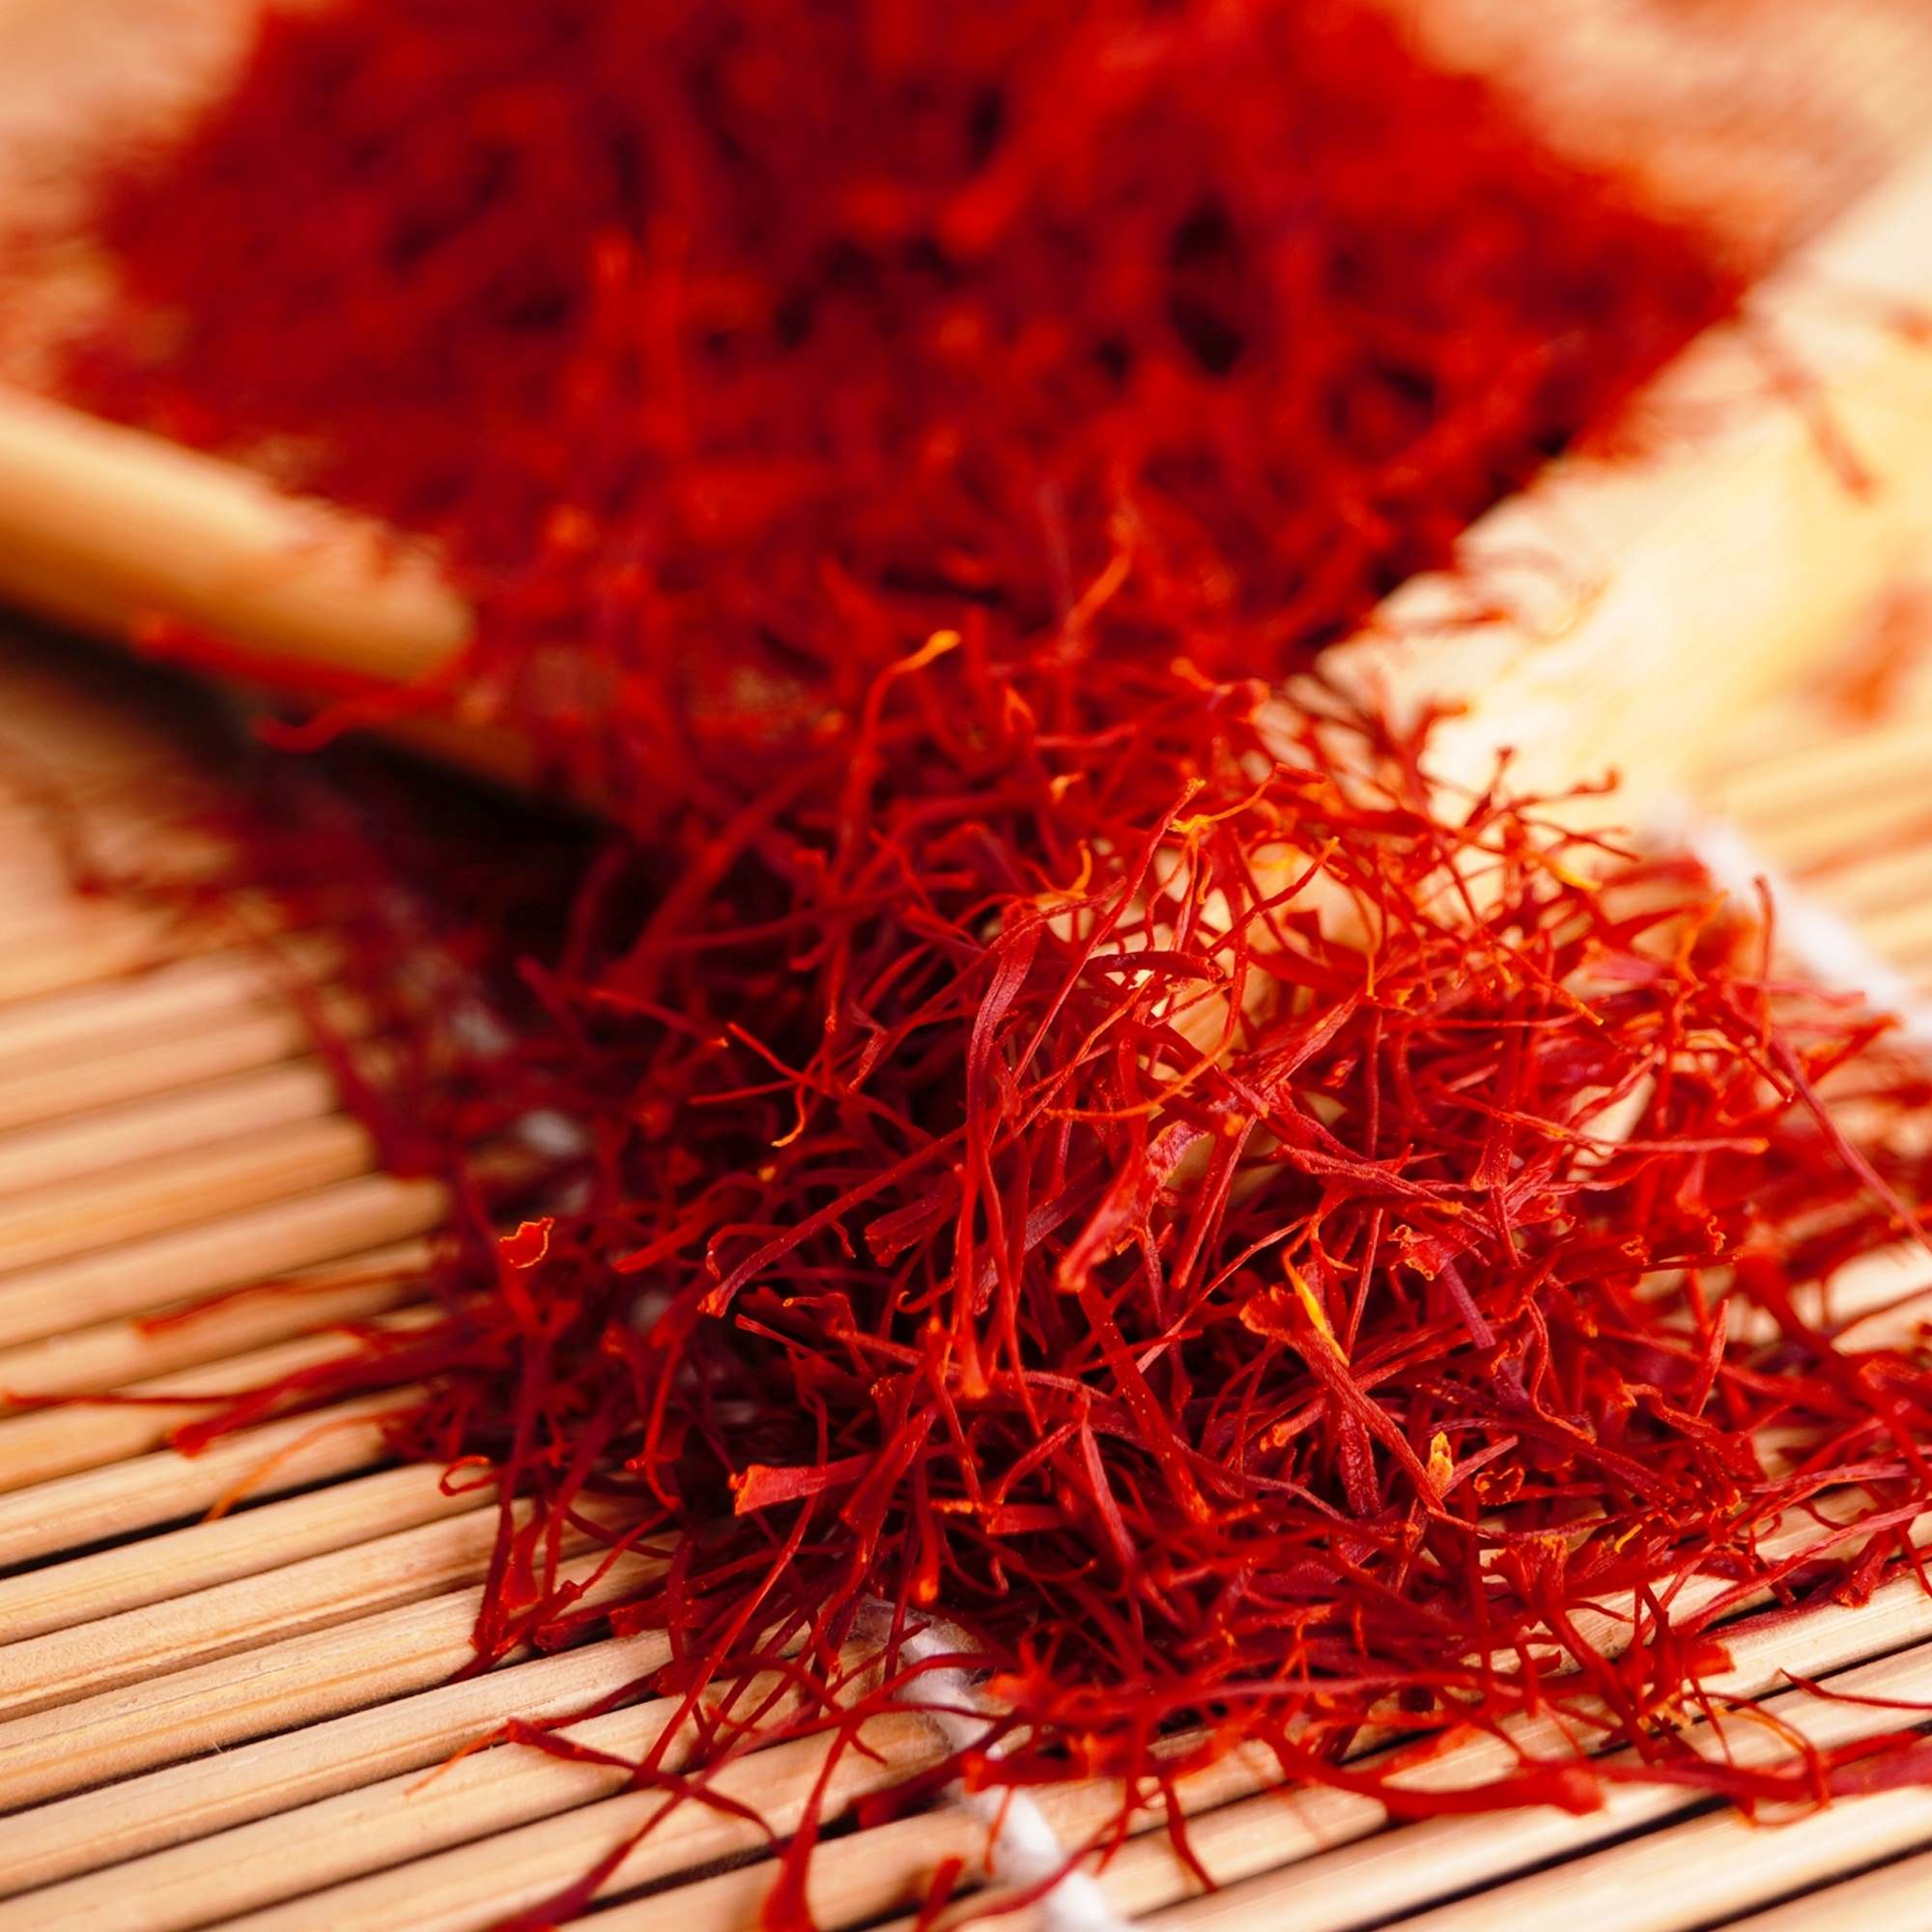 Picture of saffron threads